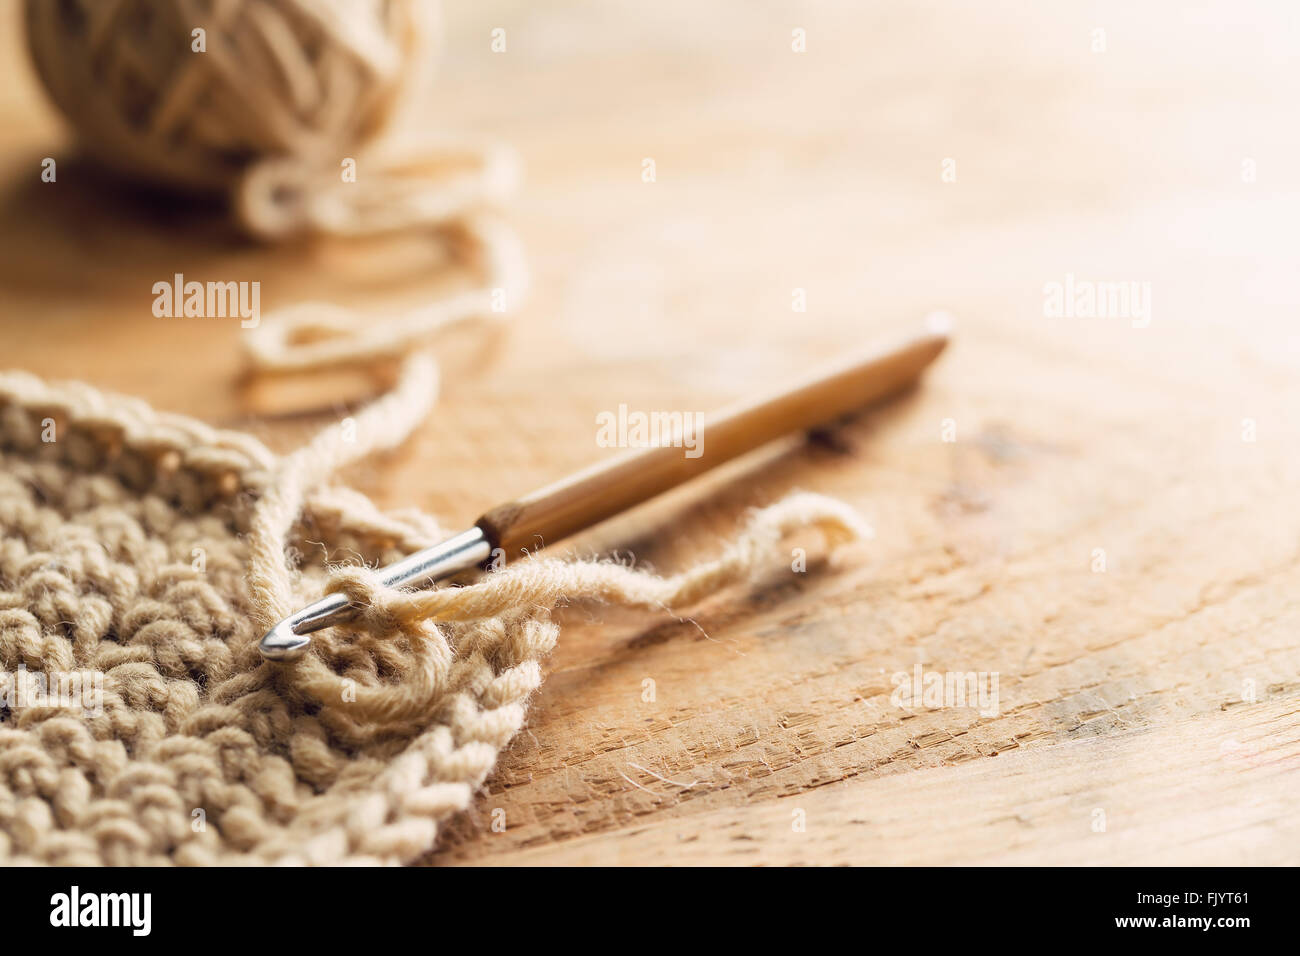 Crochet hook on wooden background Stock Photo